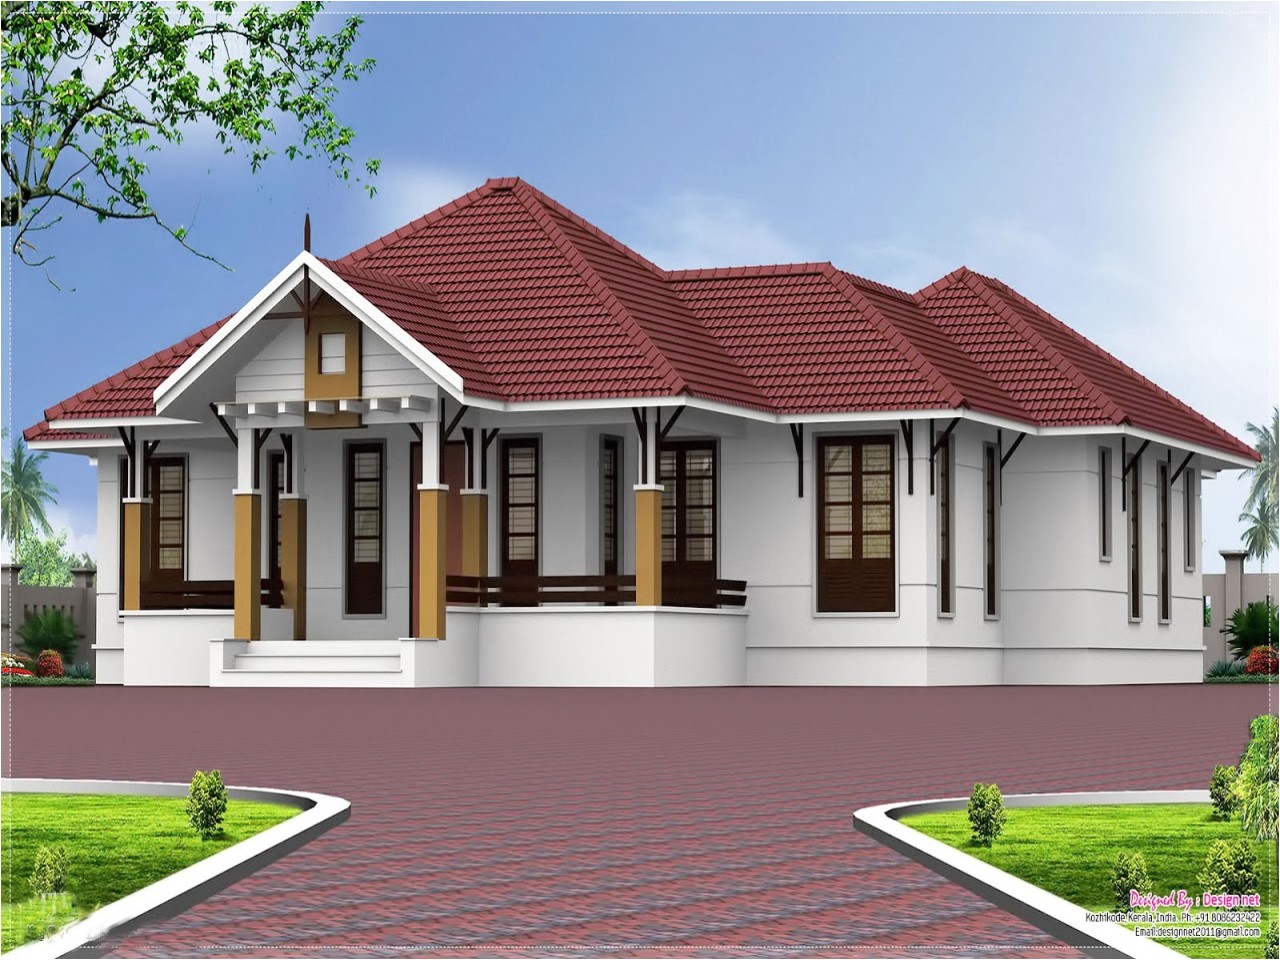 6cbbdbb4111facf1 single floor kerala home design kerala single floor 4 bedroom house plans